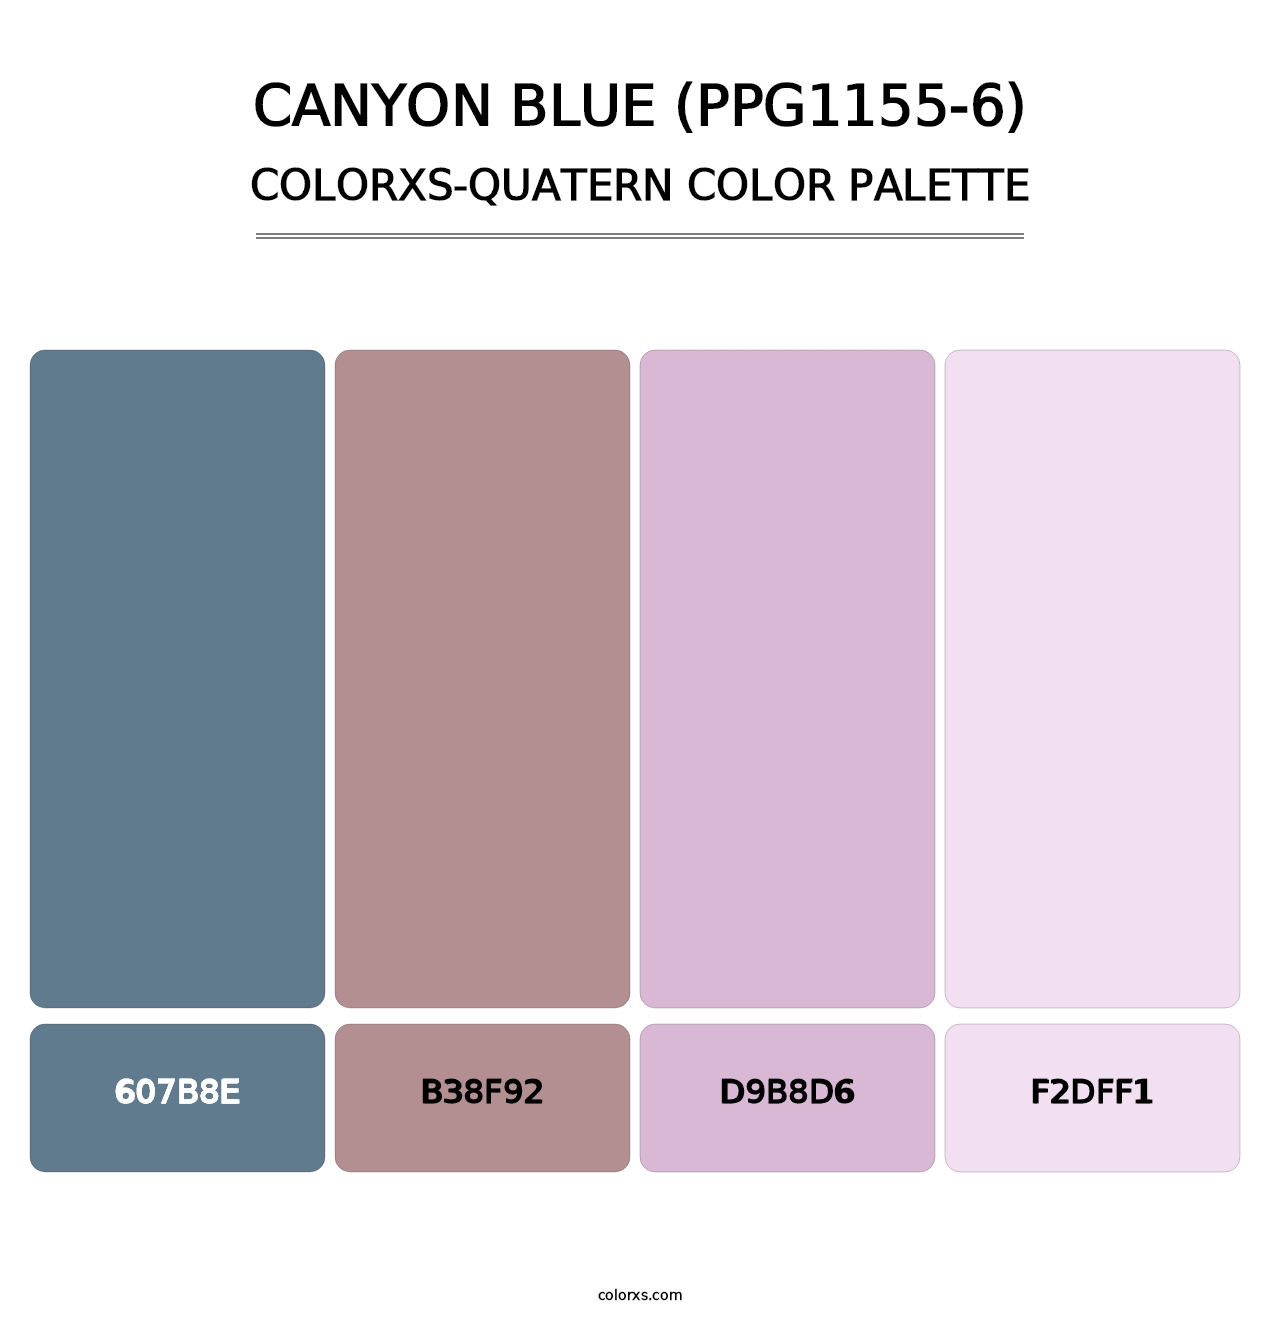 Canyon Blue (PPG1155-6) - Colorxs Quatern Palette